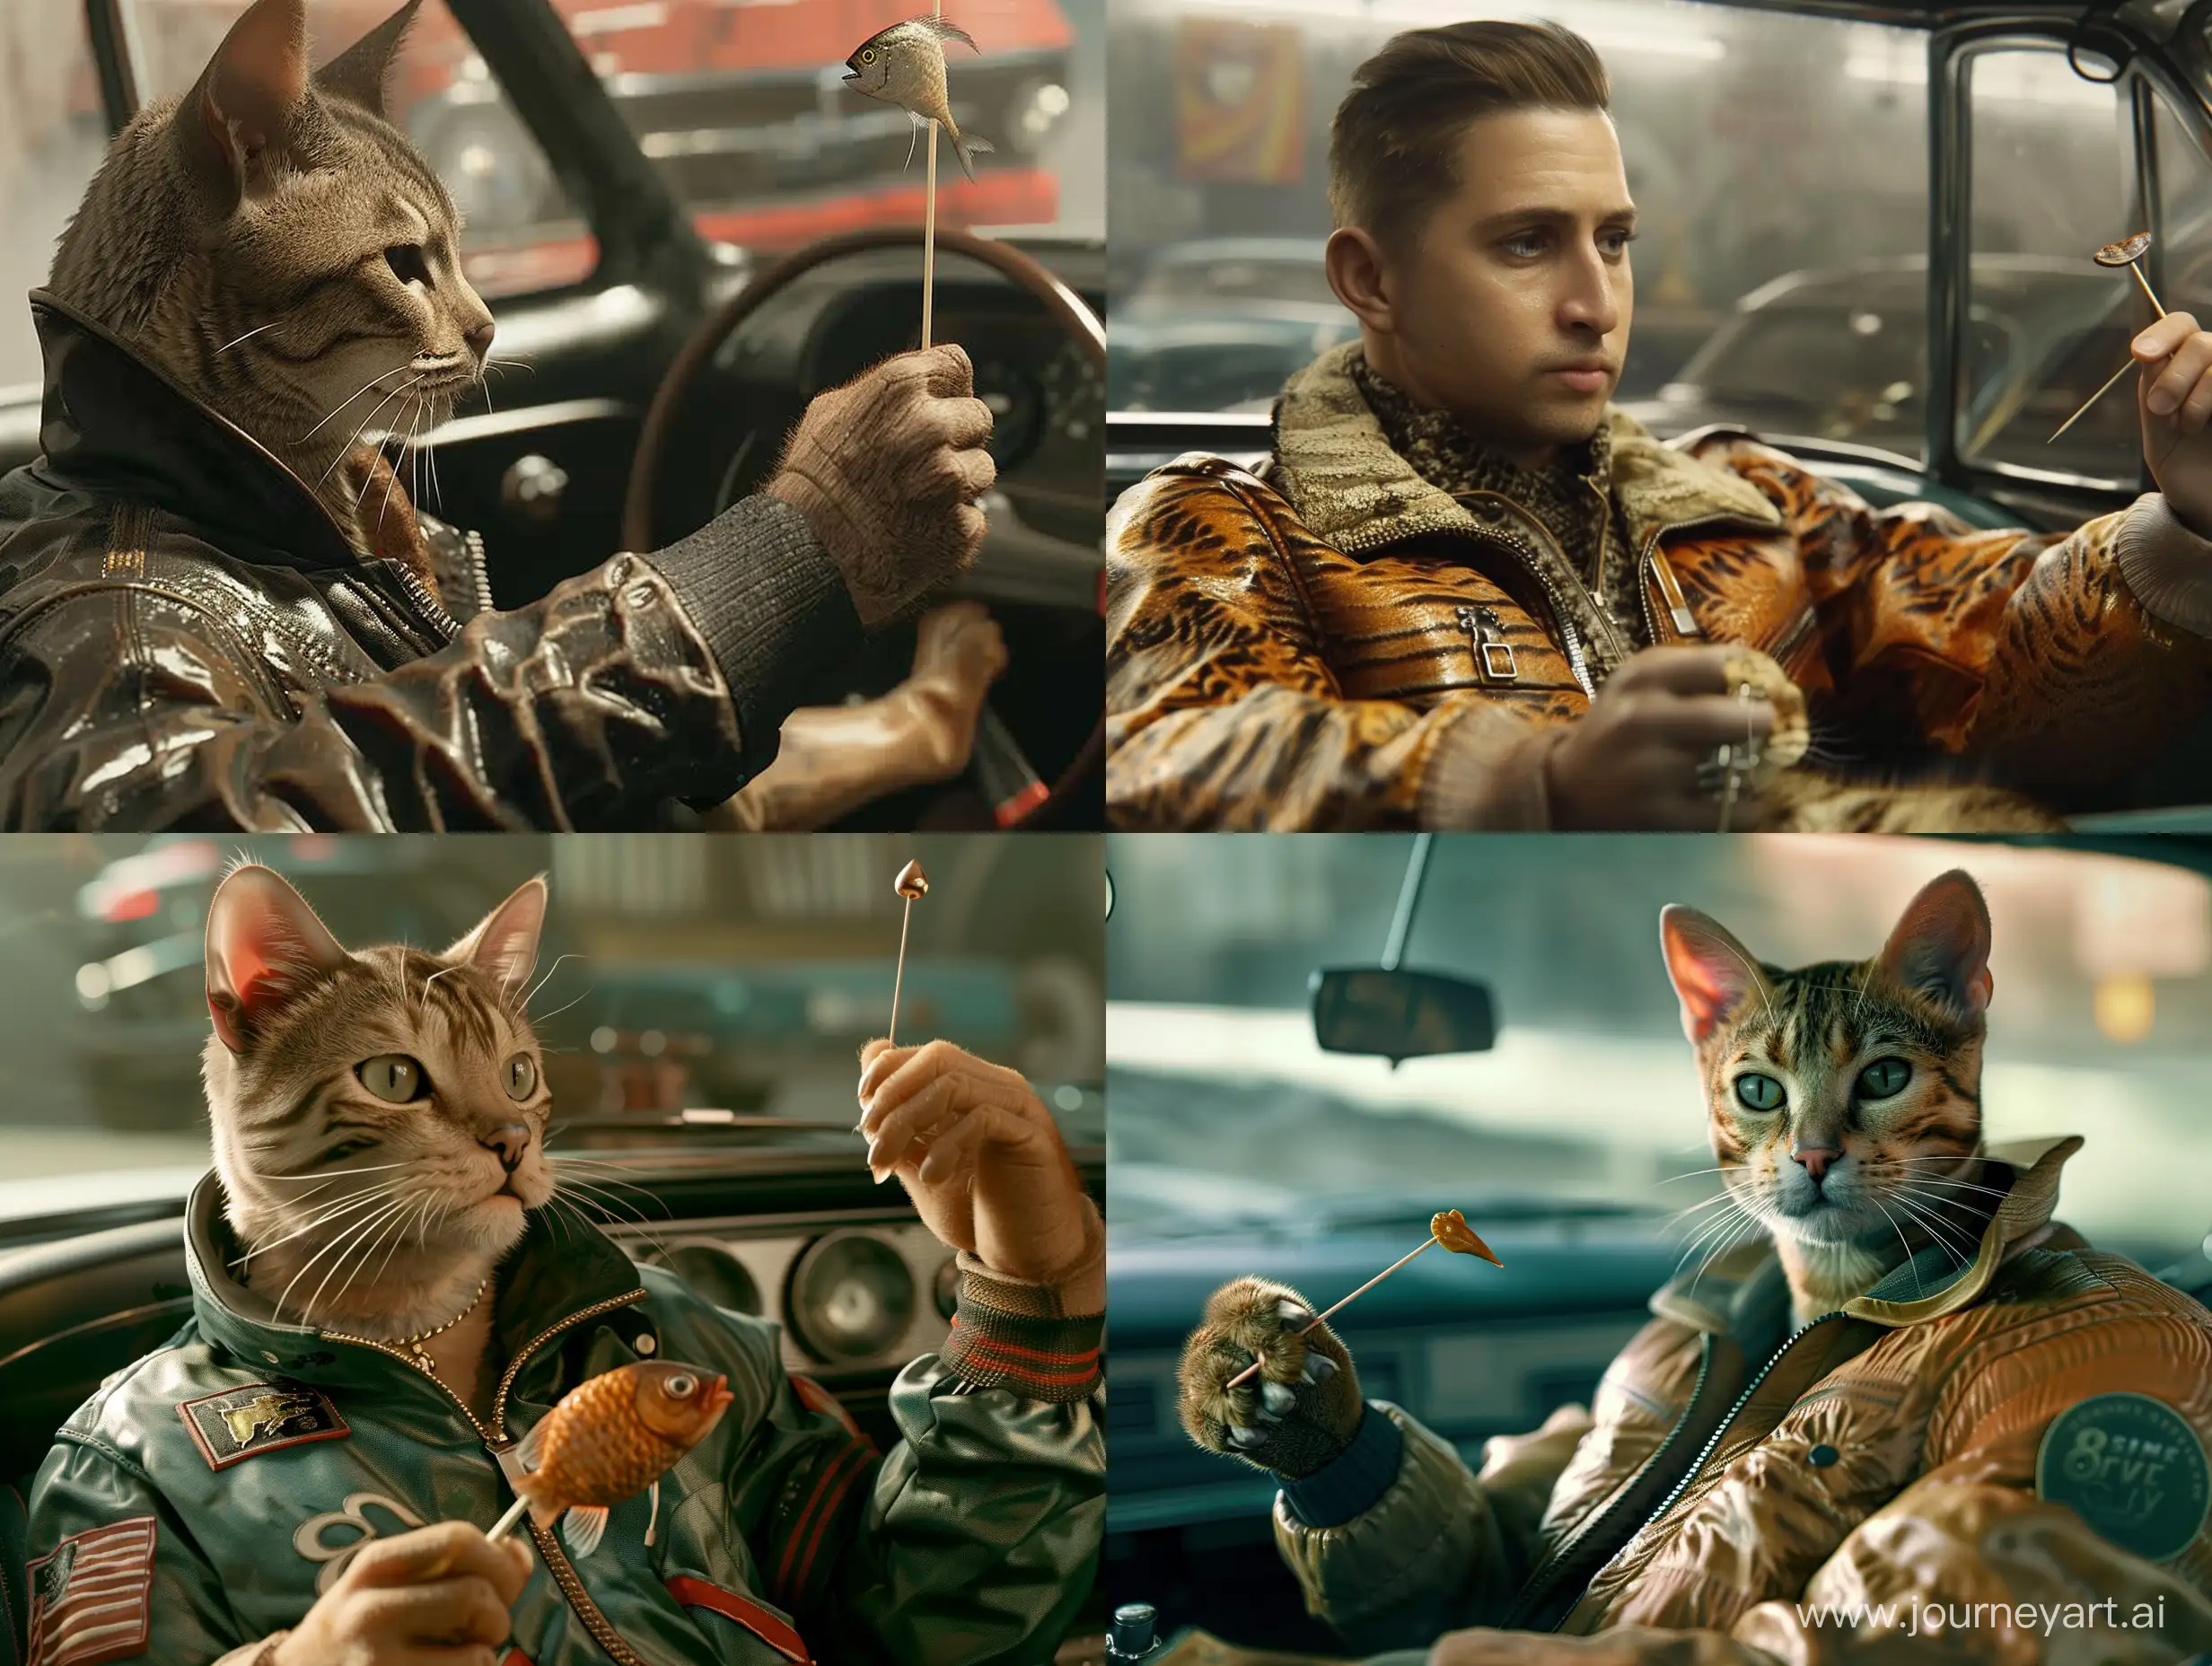 Cool-Cat-in-Bomber-Jacket-Ryan-Gosling-Inspired-Image